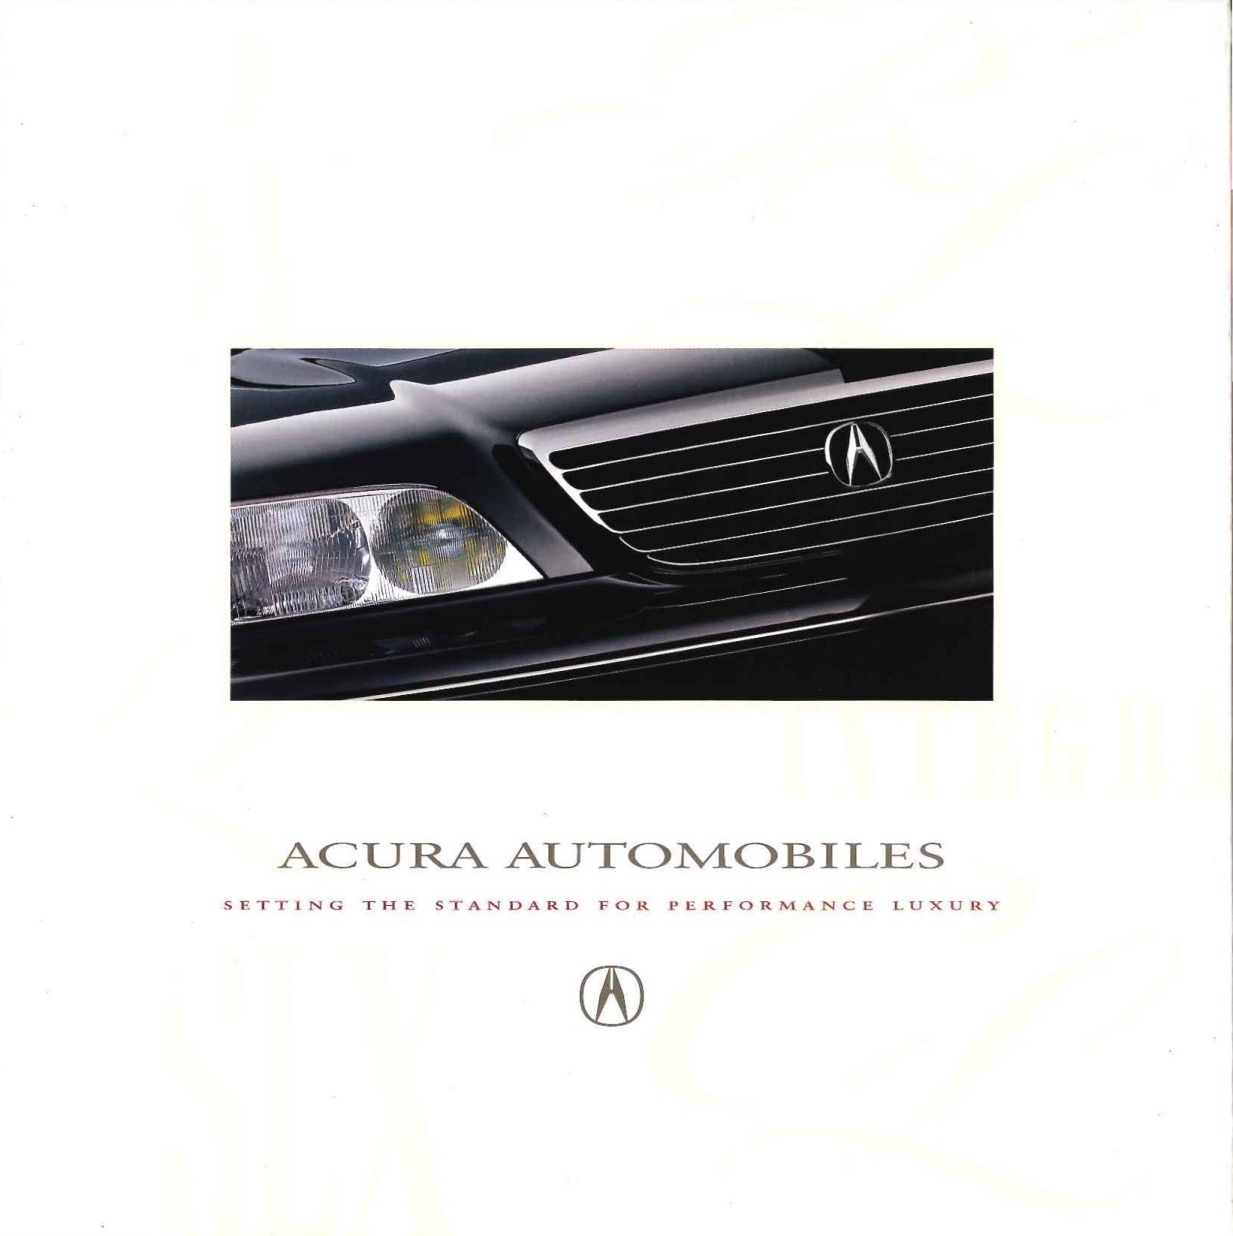 1997 Acura Full Line Brochure